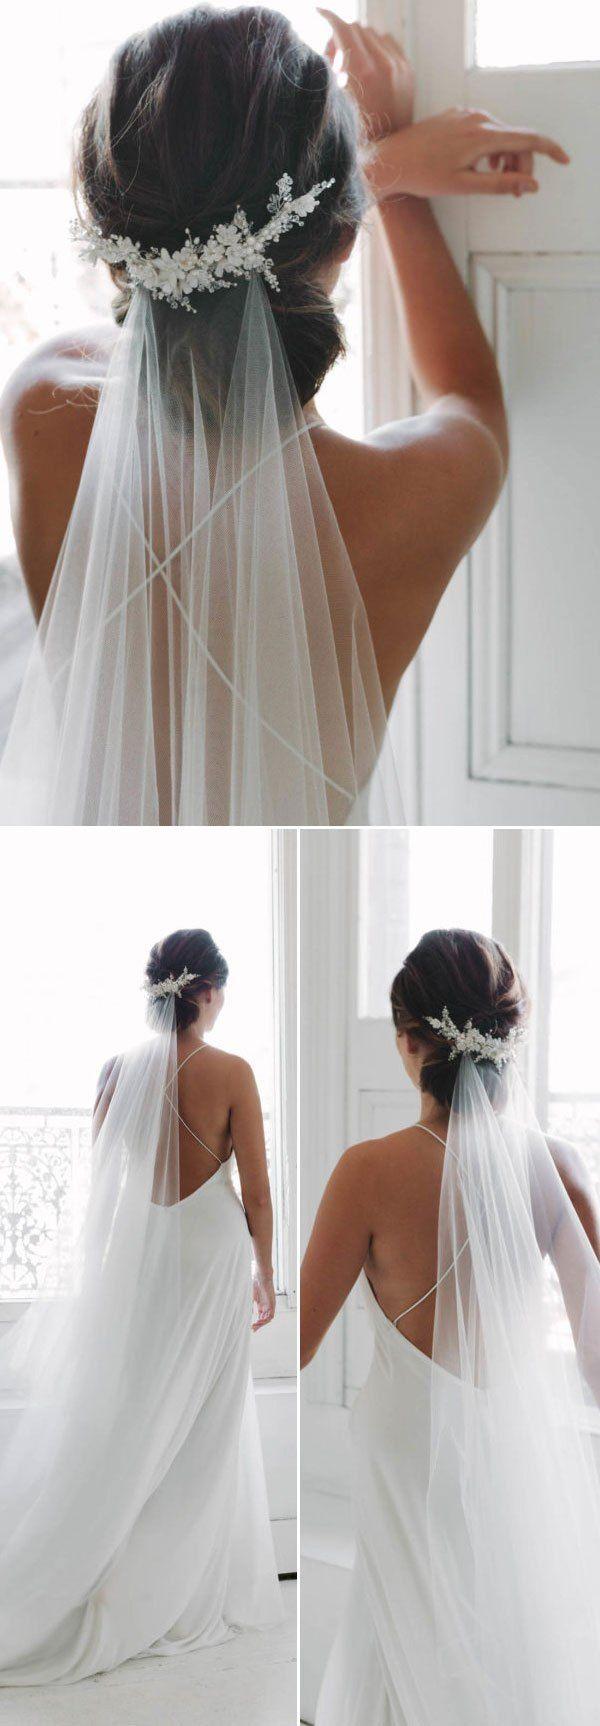 Hochzeit - Top 20 Wedding Hairstyles With Veils And Accessories